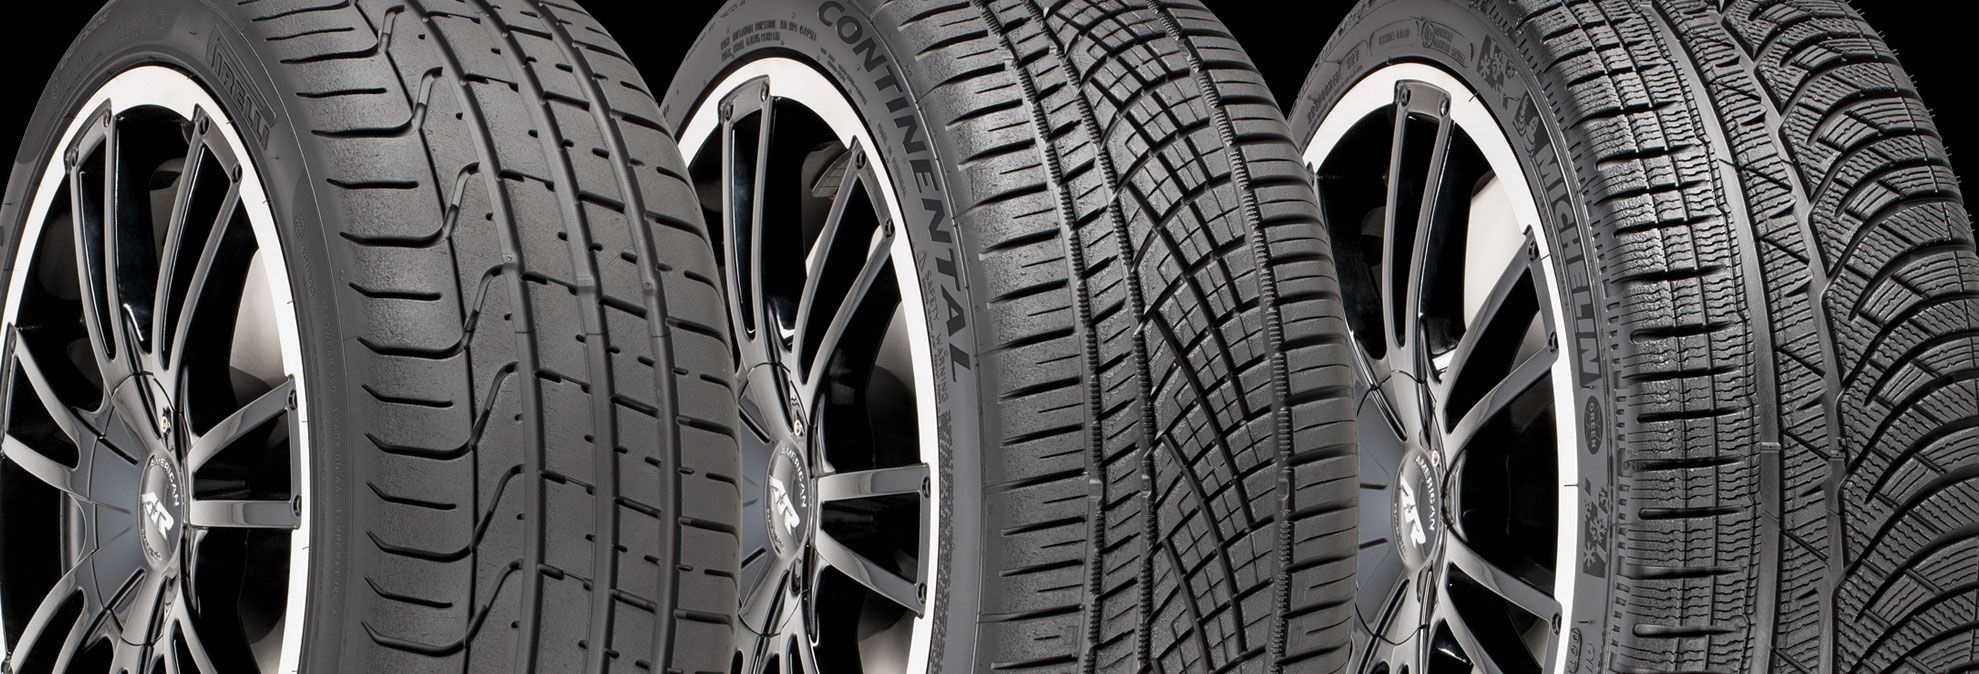 Best brand of tire